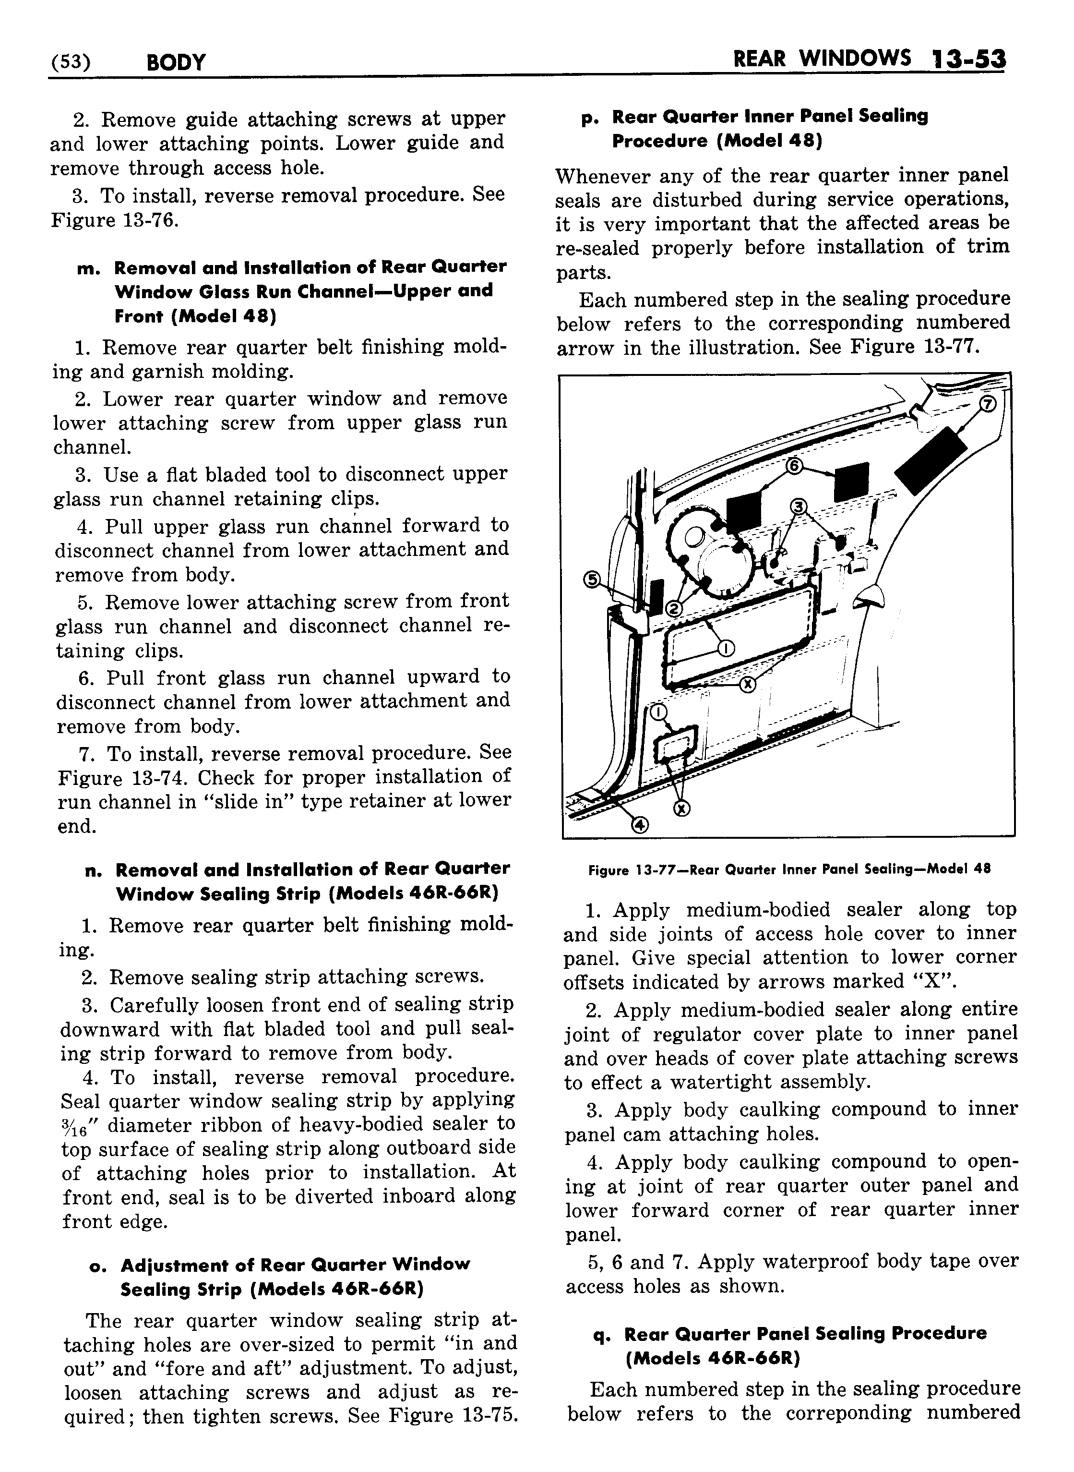 n_1957 Buick Body Service Manual-055-055.jpg